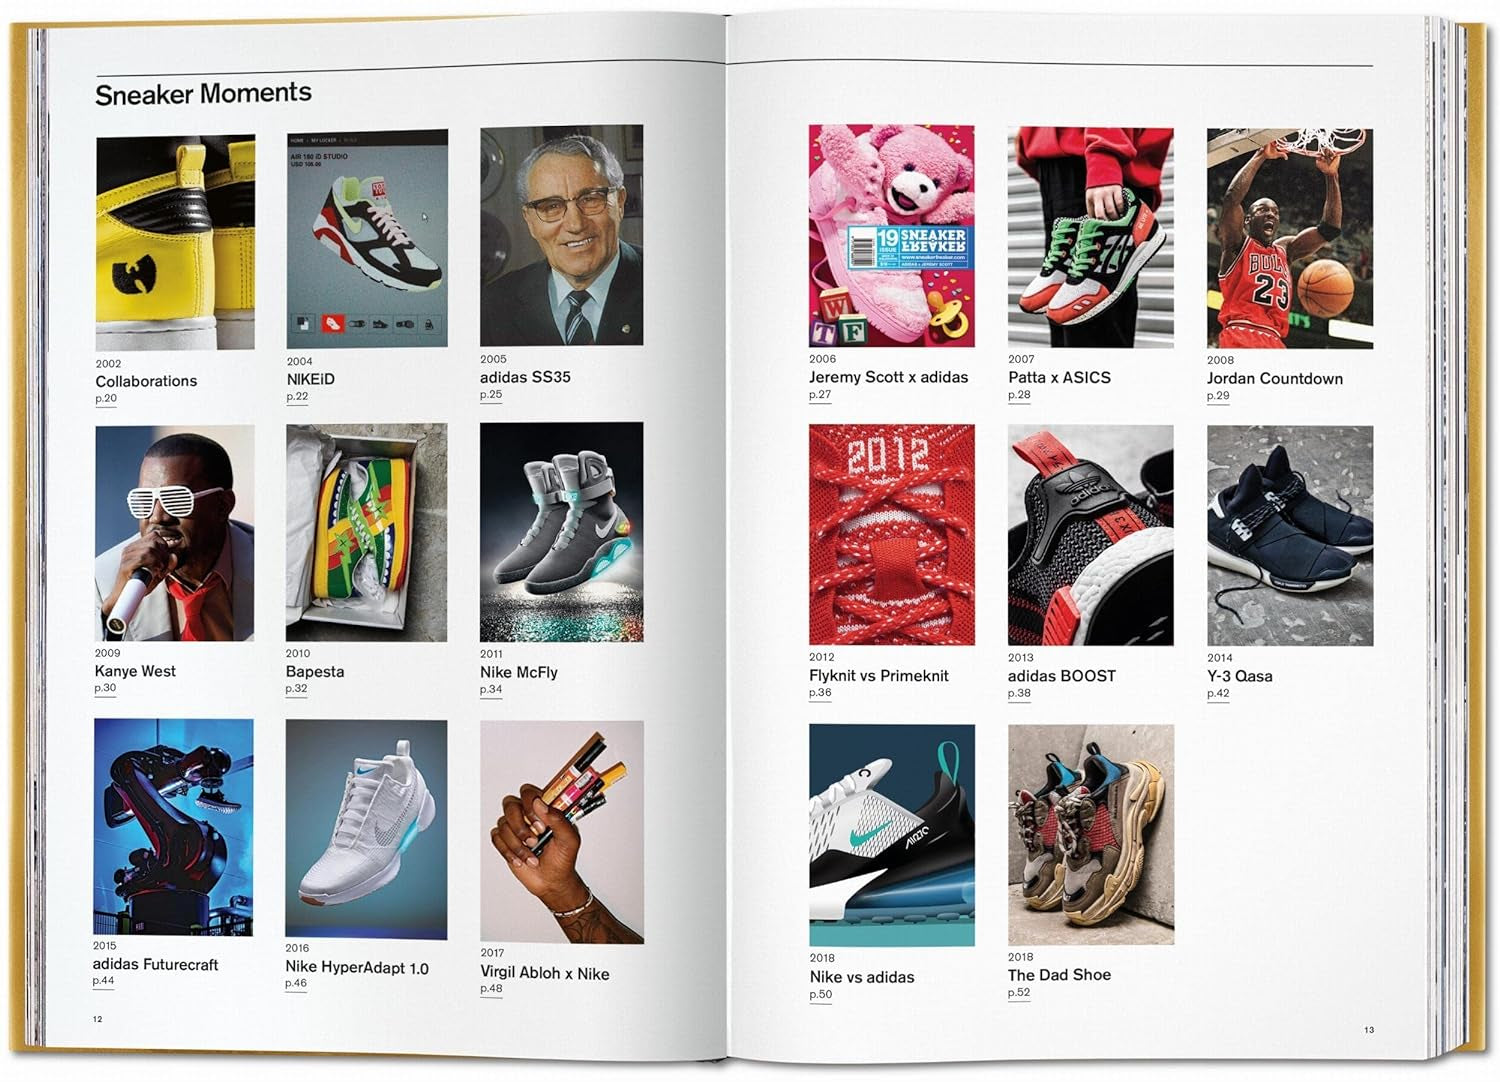 The Ultimate Sneaker Book (Sneaker Freaker)